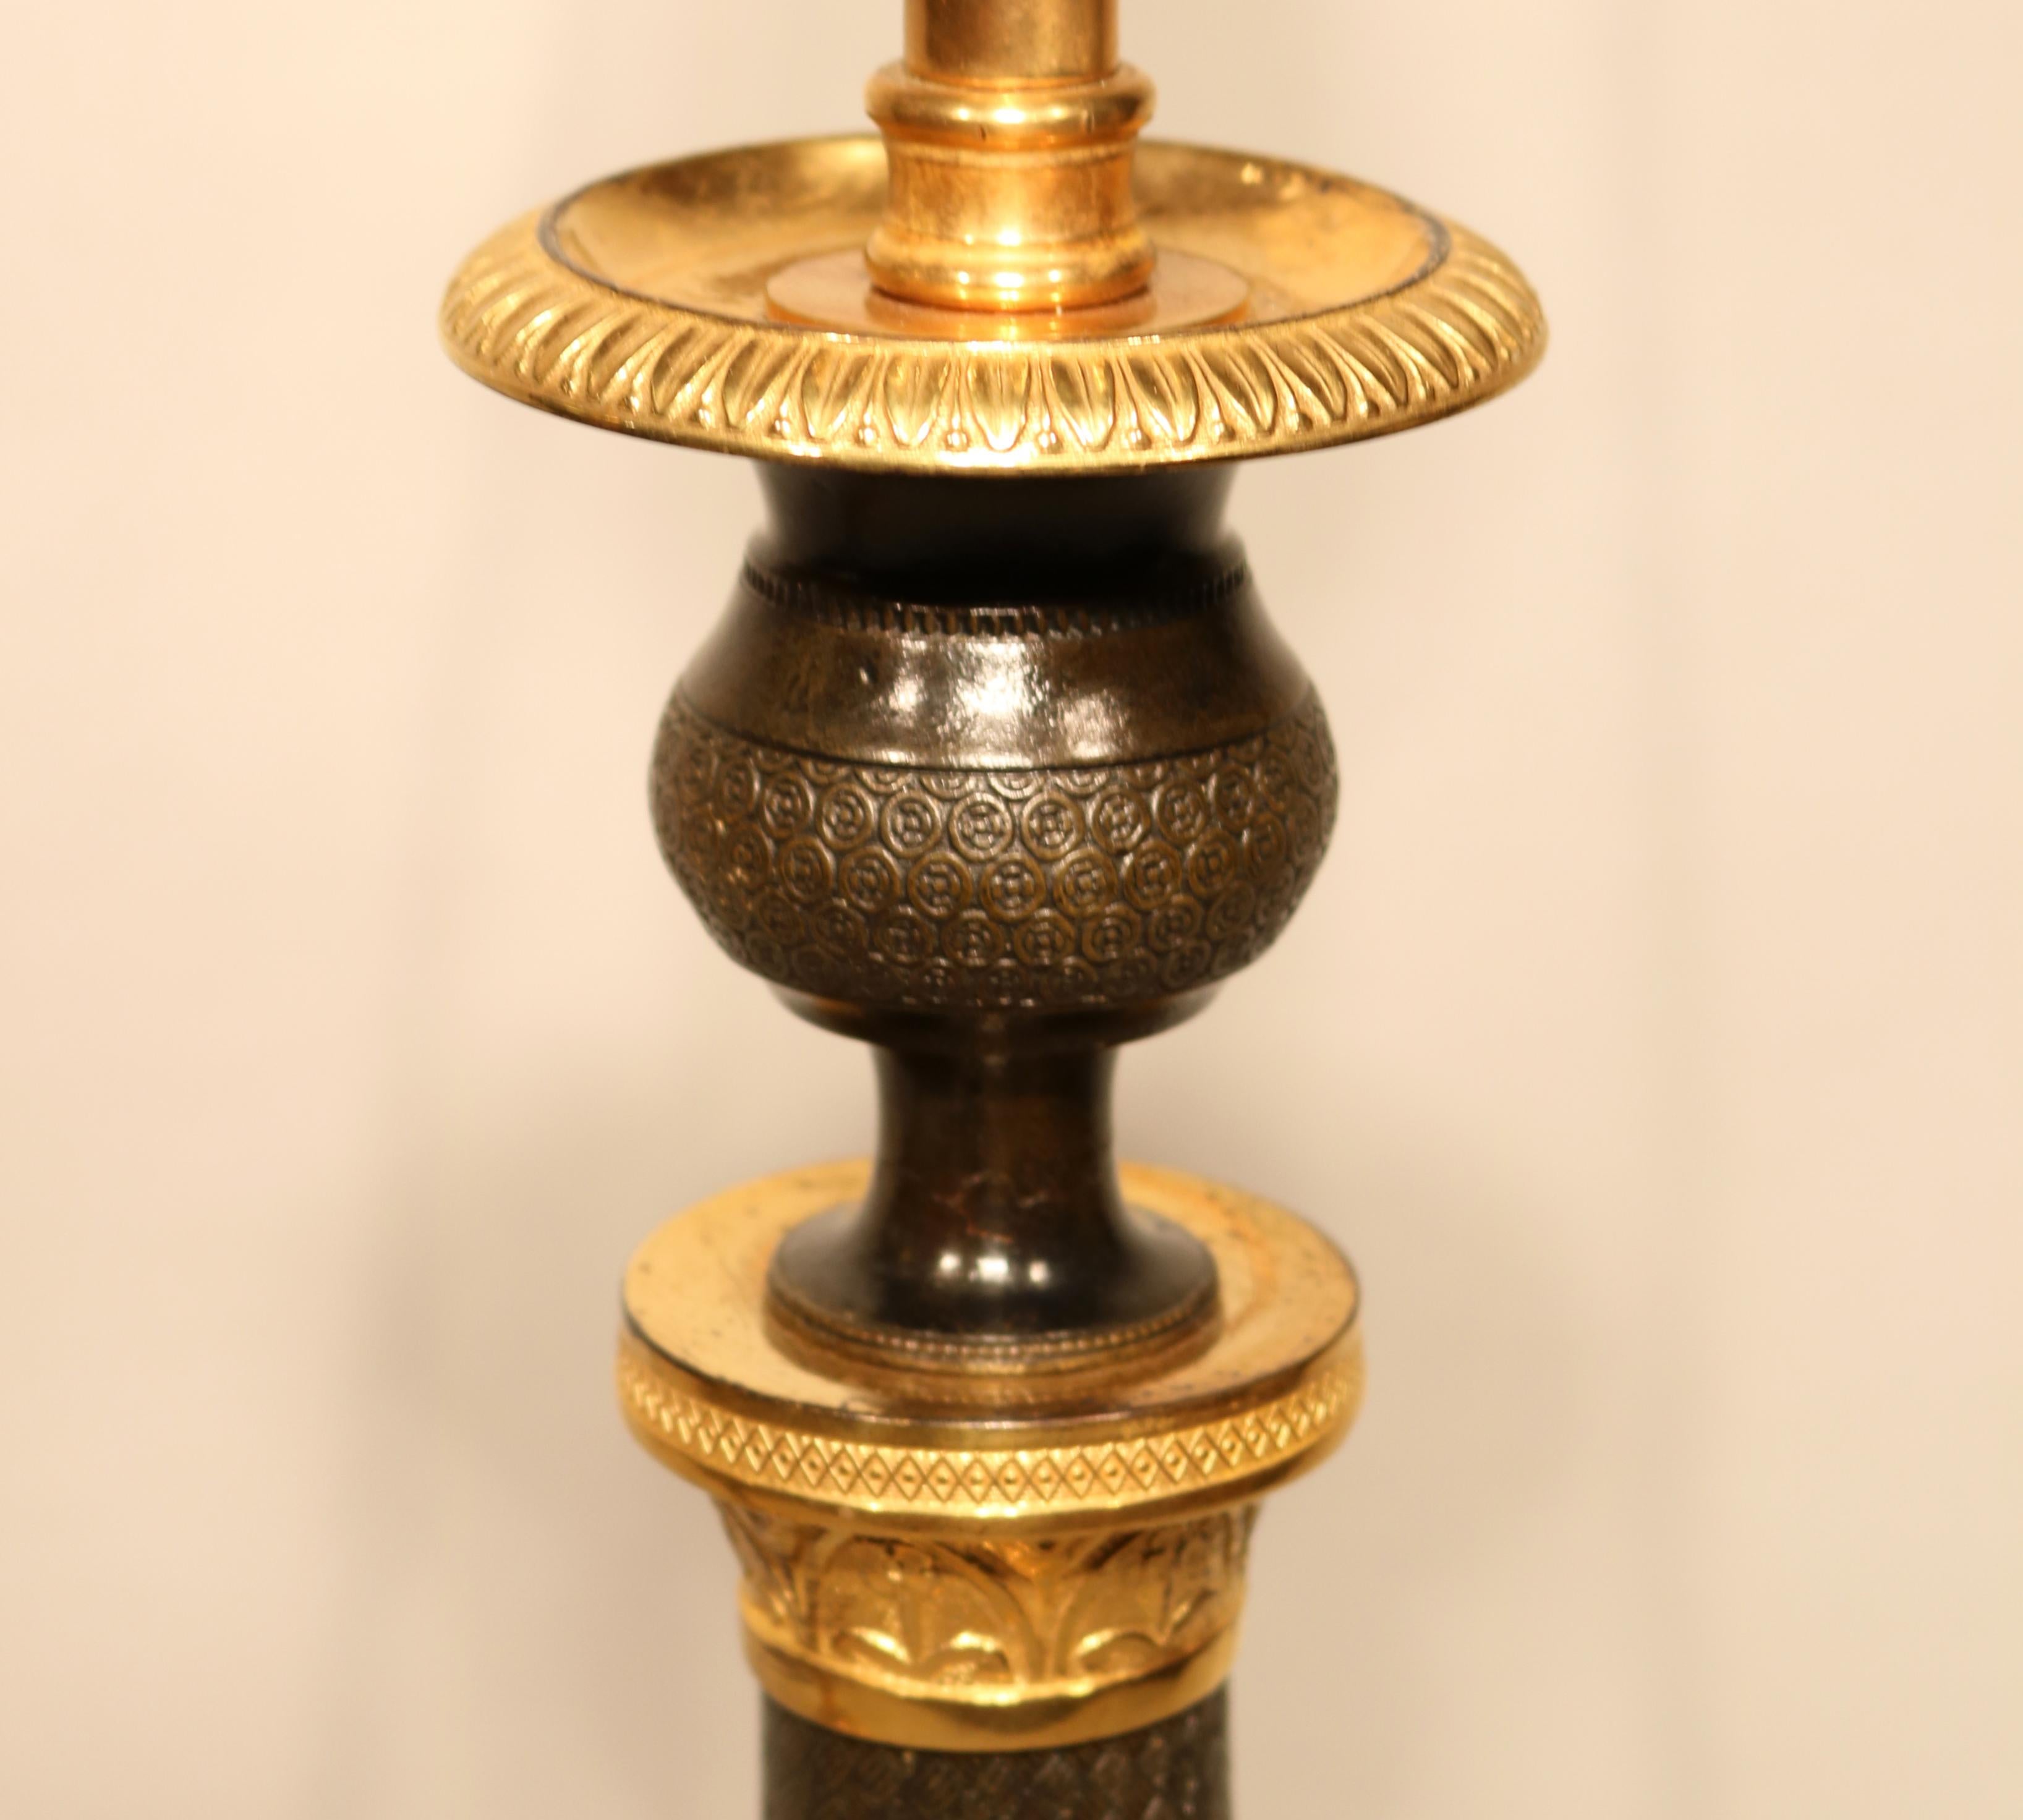 English Large Pair of Early 19th Century Candlesticks Having Engine-Turned Urn-Shaped